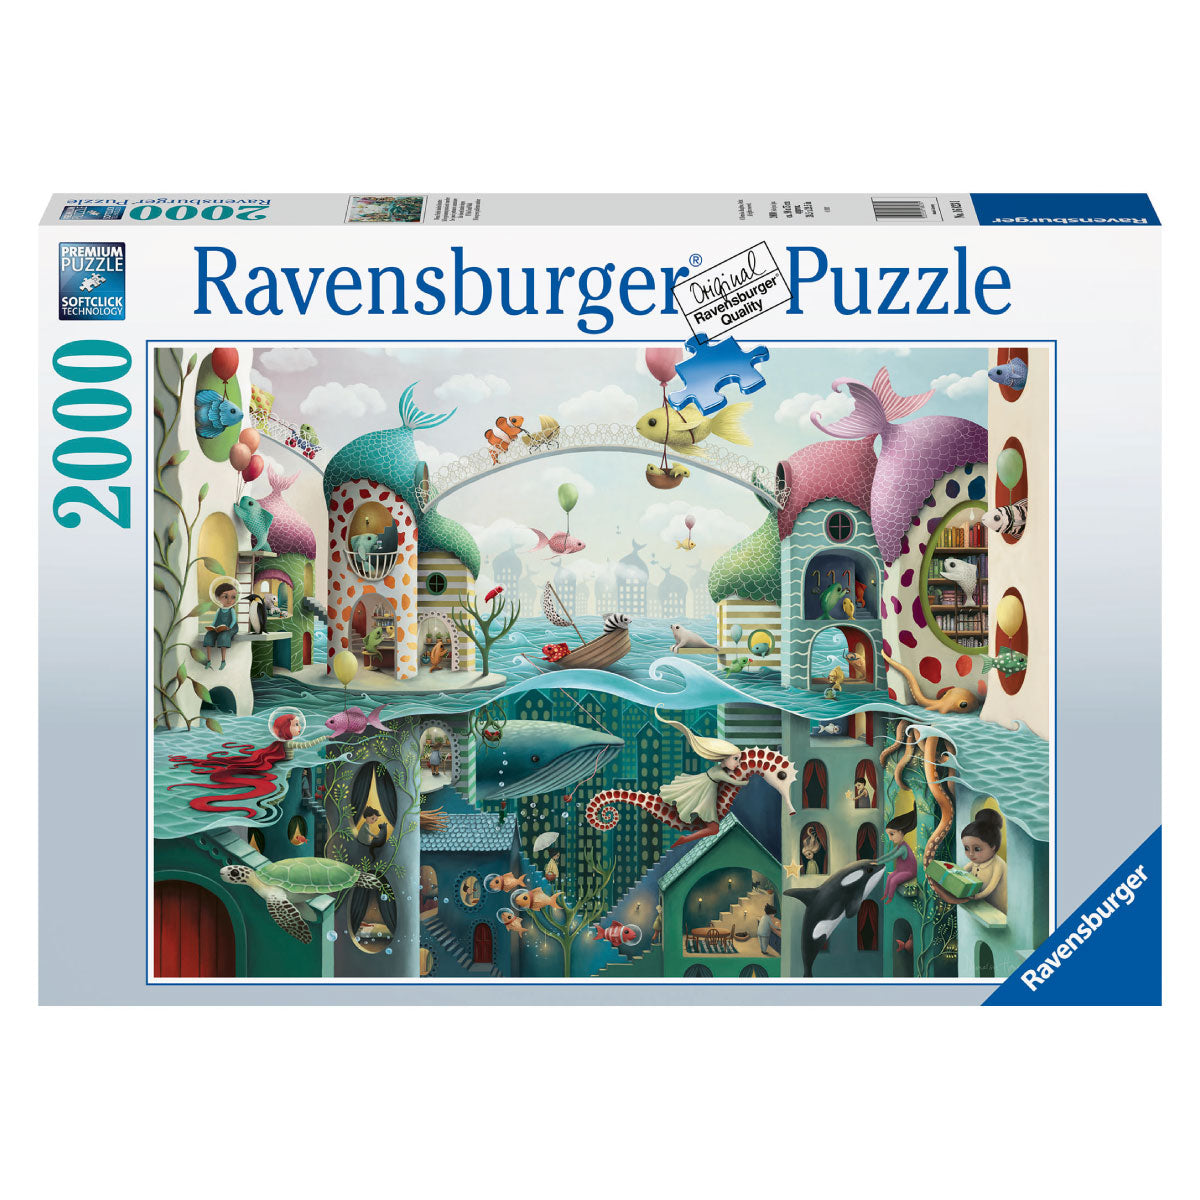 If Fish Could Walk - 2000 pc Ravensburger Puzzle